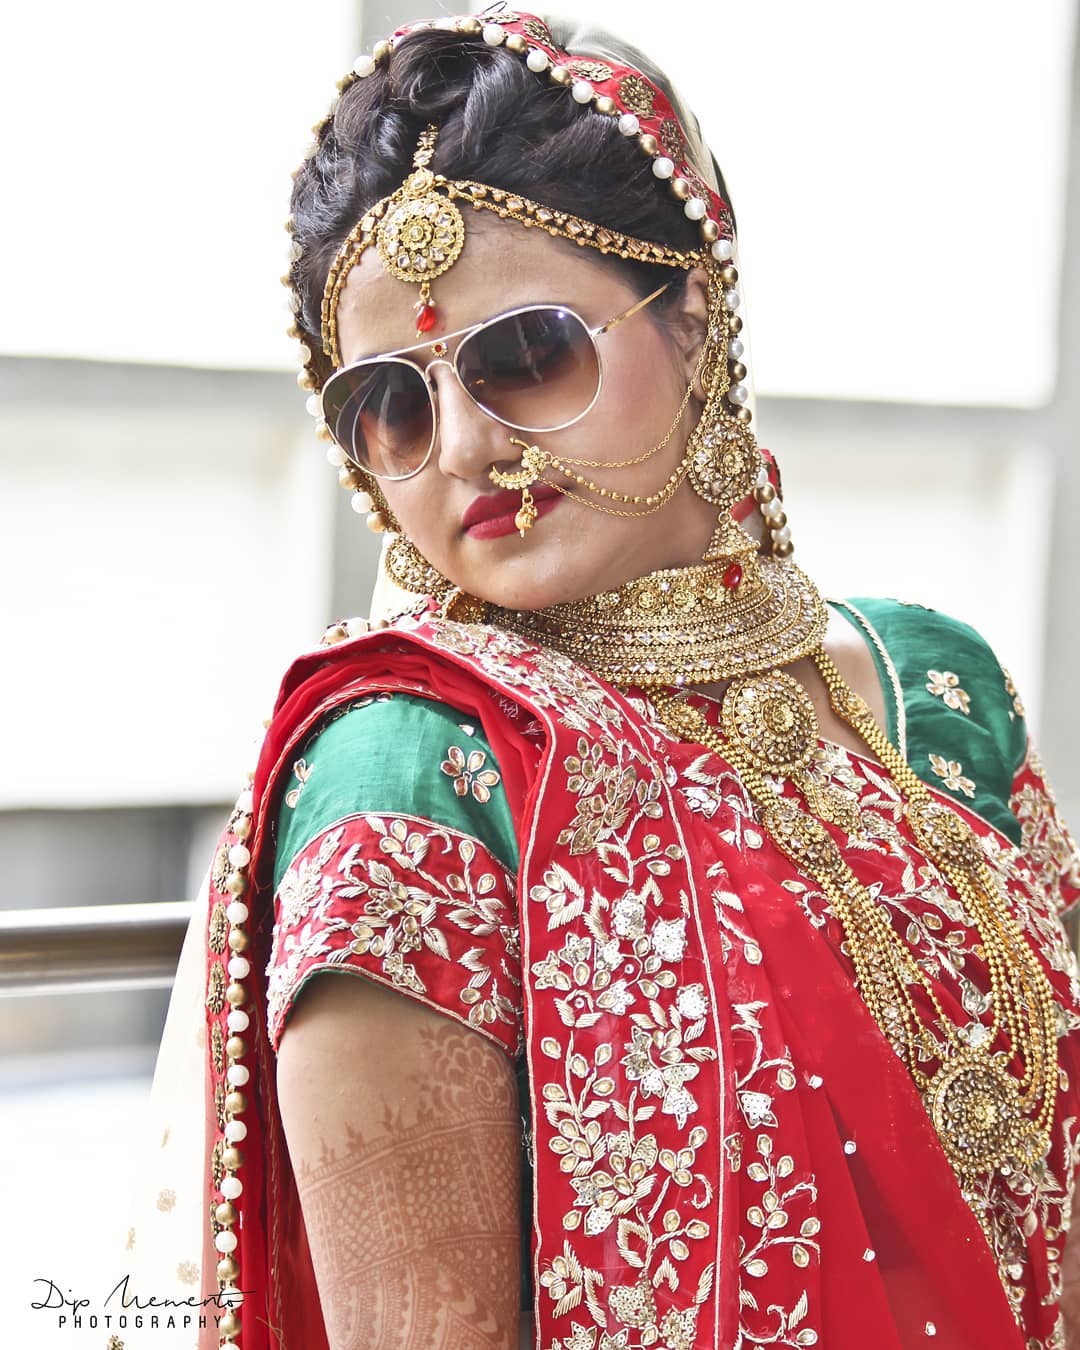 Uff! Yeh Bride's Swag, Wallaah........ 😍😍
✨✨✨✨✨✨✨✨✨✨✨✨✨✨✨✨✨ Wedding Portraits Shoot:📷 #dipmementophotography
@dip_memento_photography
@dipthakkar.clicker
https://www.facebook.com/photographybydip/ ✨✨✨✨✨✨✨✨✨✨✨✨✨✨✨✨✨
#india #indian #photo #photography #photographer #pic #storiesofindia #candidshoot #indianphotography #indianphotographers 
#canvasofindia #weddingportrait
 #streetphotographyindia #ahmedabad #oph #official_photographers_hub #indianshutterbugs #indiaclicks #_coi #india_everyday #i_hobbygraphy #igersoftheday #ahmedabad_diaries #dslr_official #weddingphotographer #india_clicks #_soimumbai #indianphotography #photographers_of_india #destinationwedding